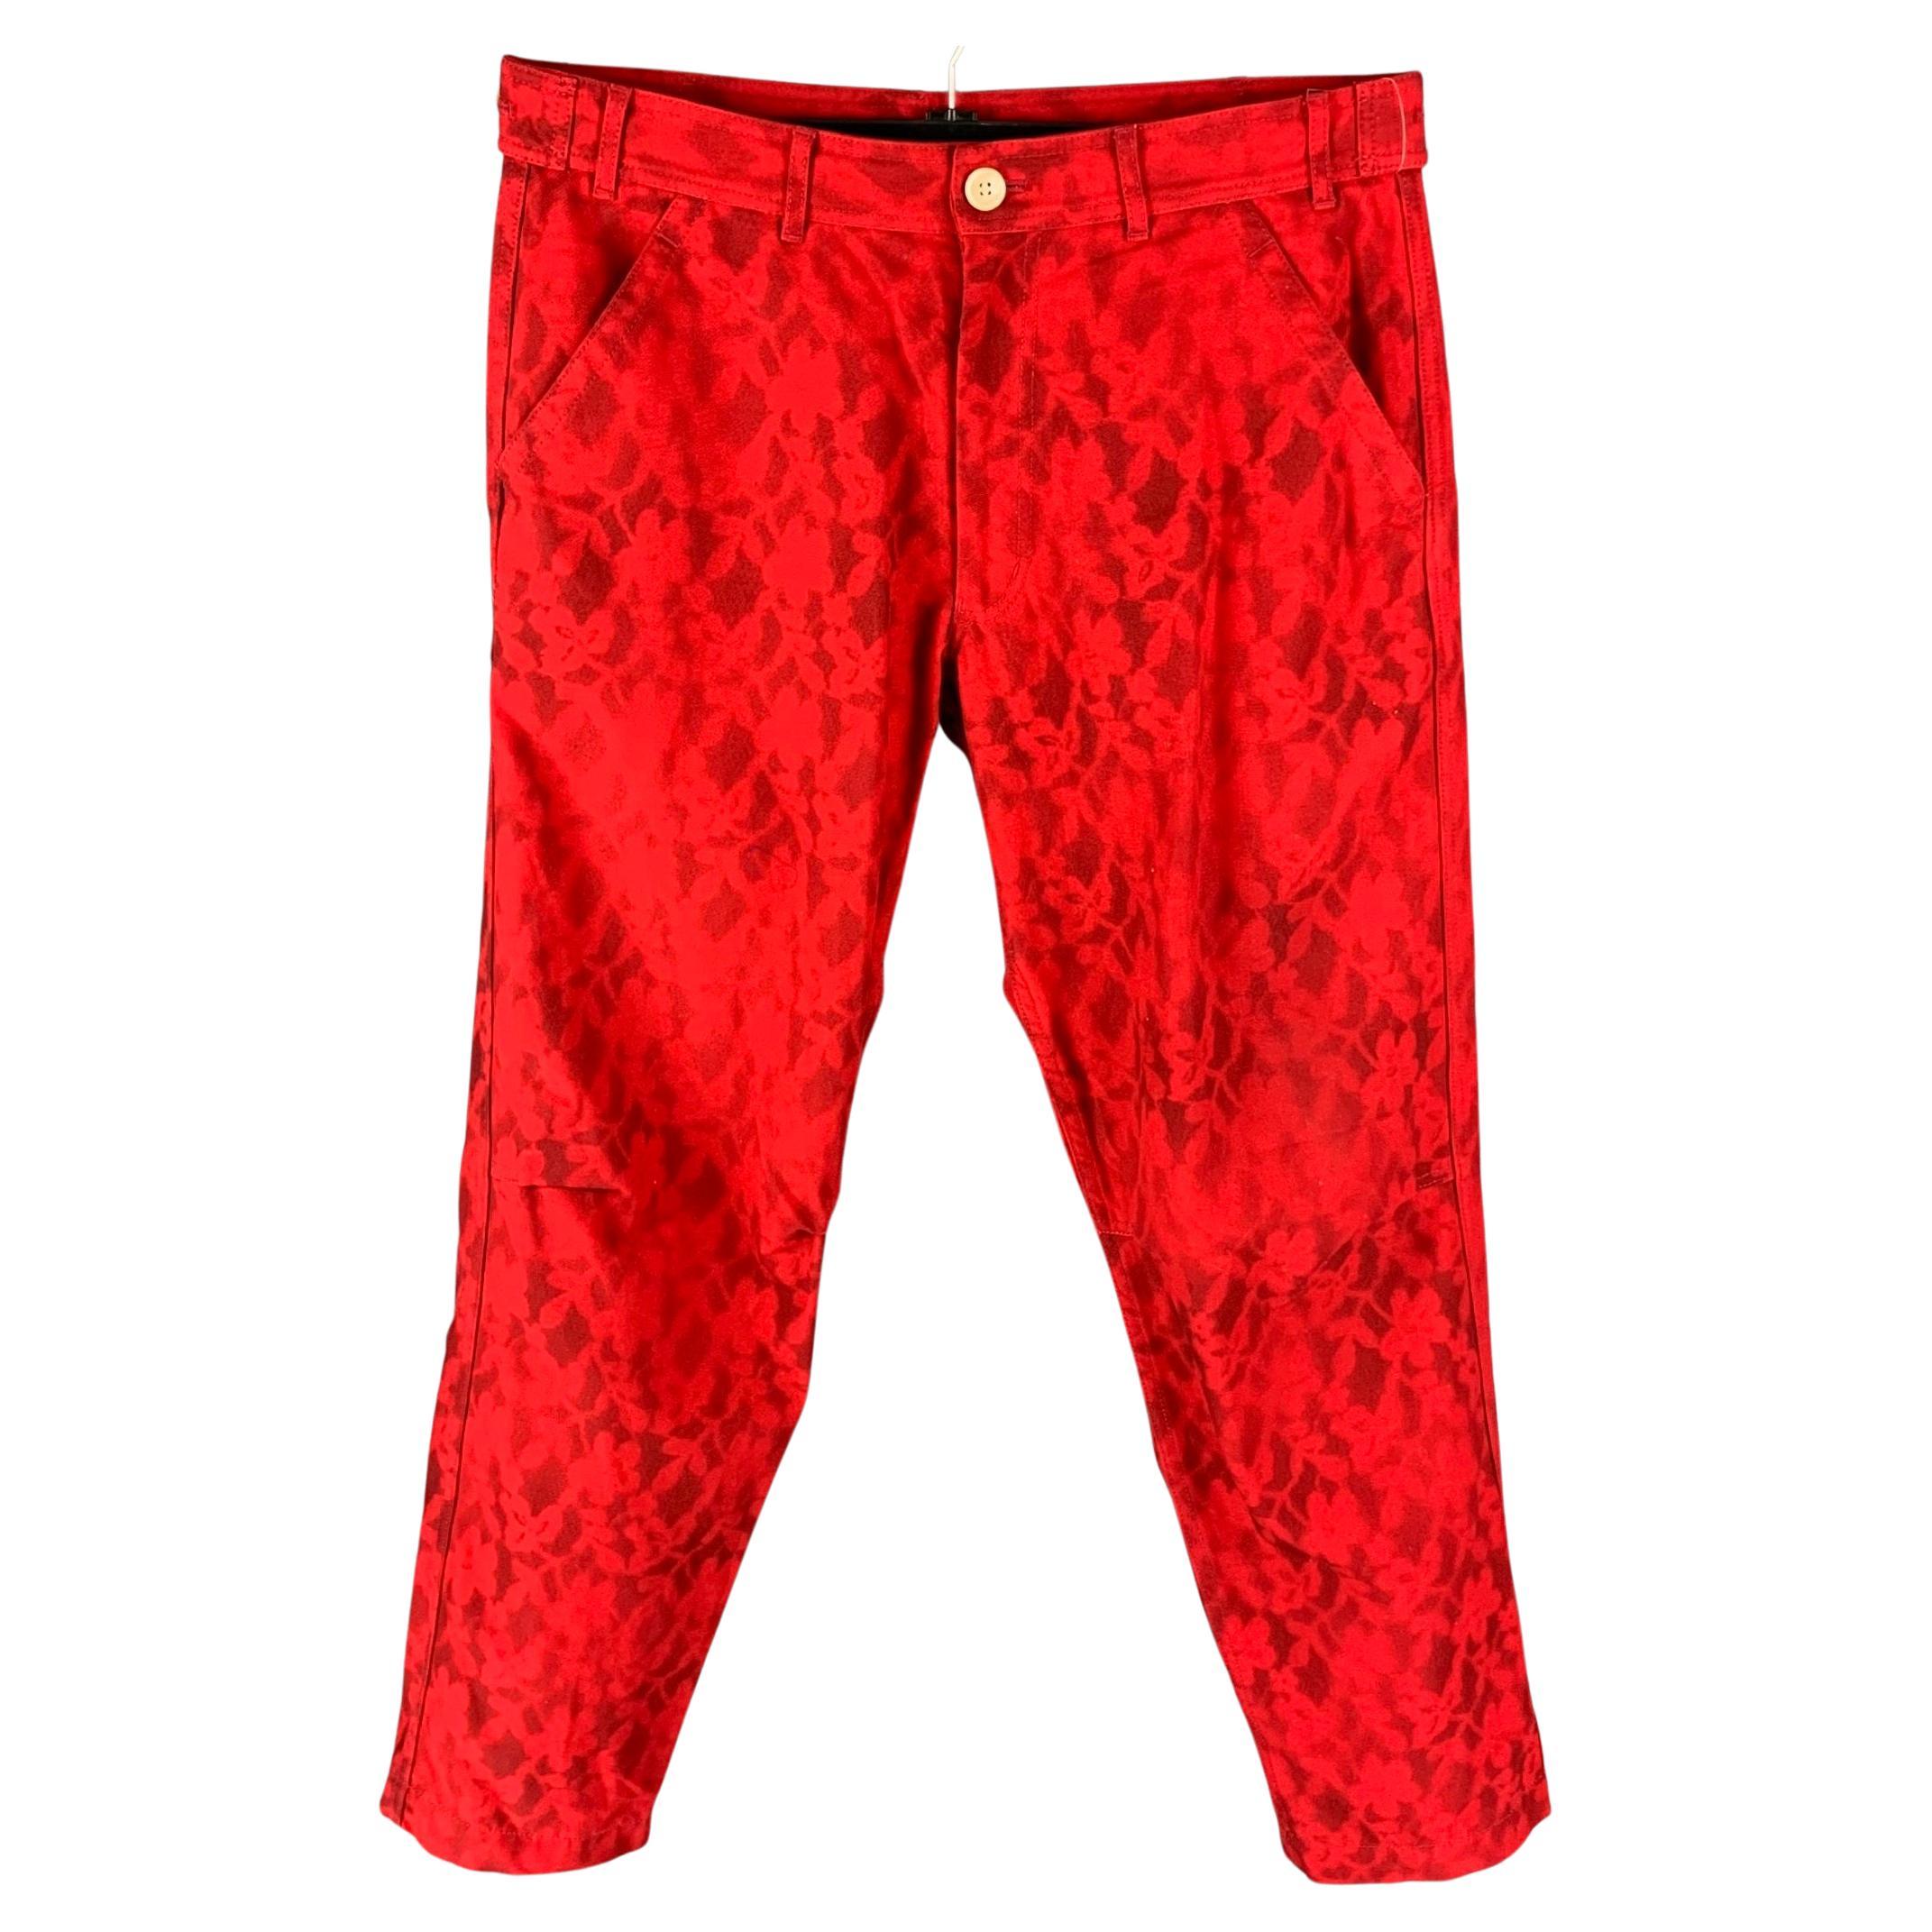 COMME des GARCONS SHIRT Size 34 Red Black Dyed Cotton Casual Pants